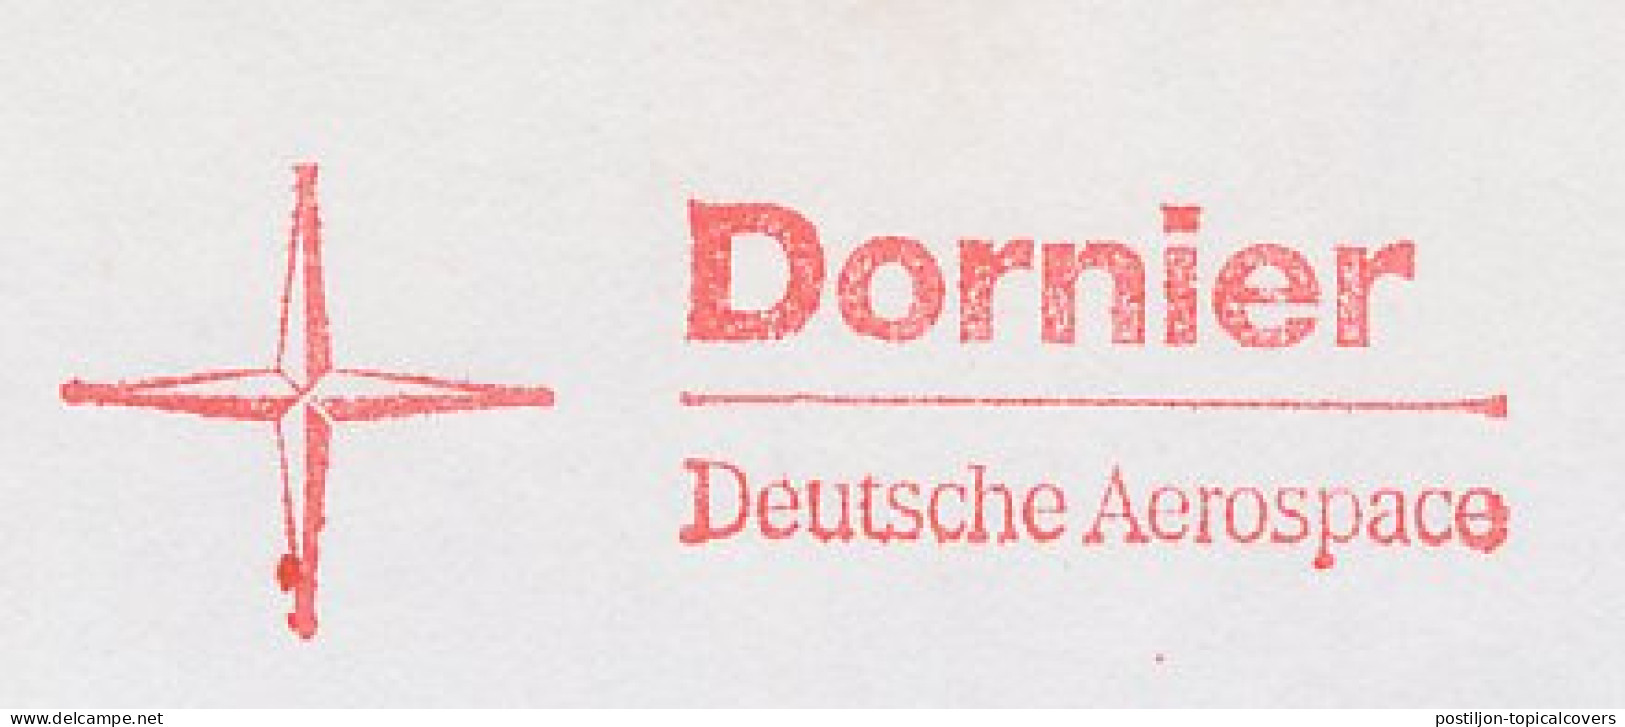 Meter Cut Germany 1989 Dornier - Aerospace - Astronomie